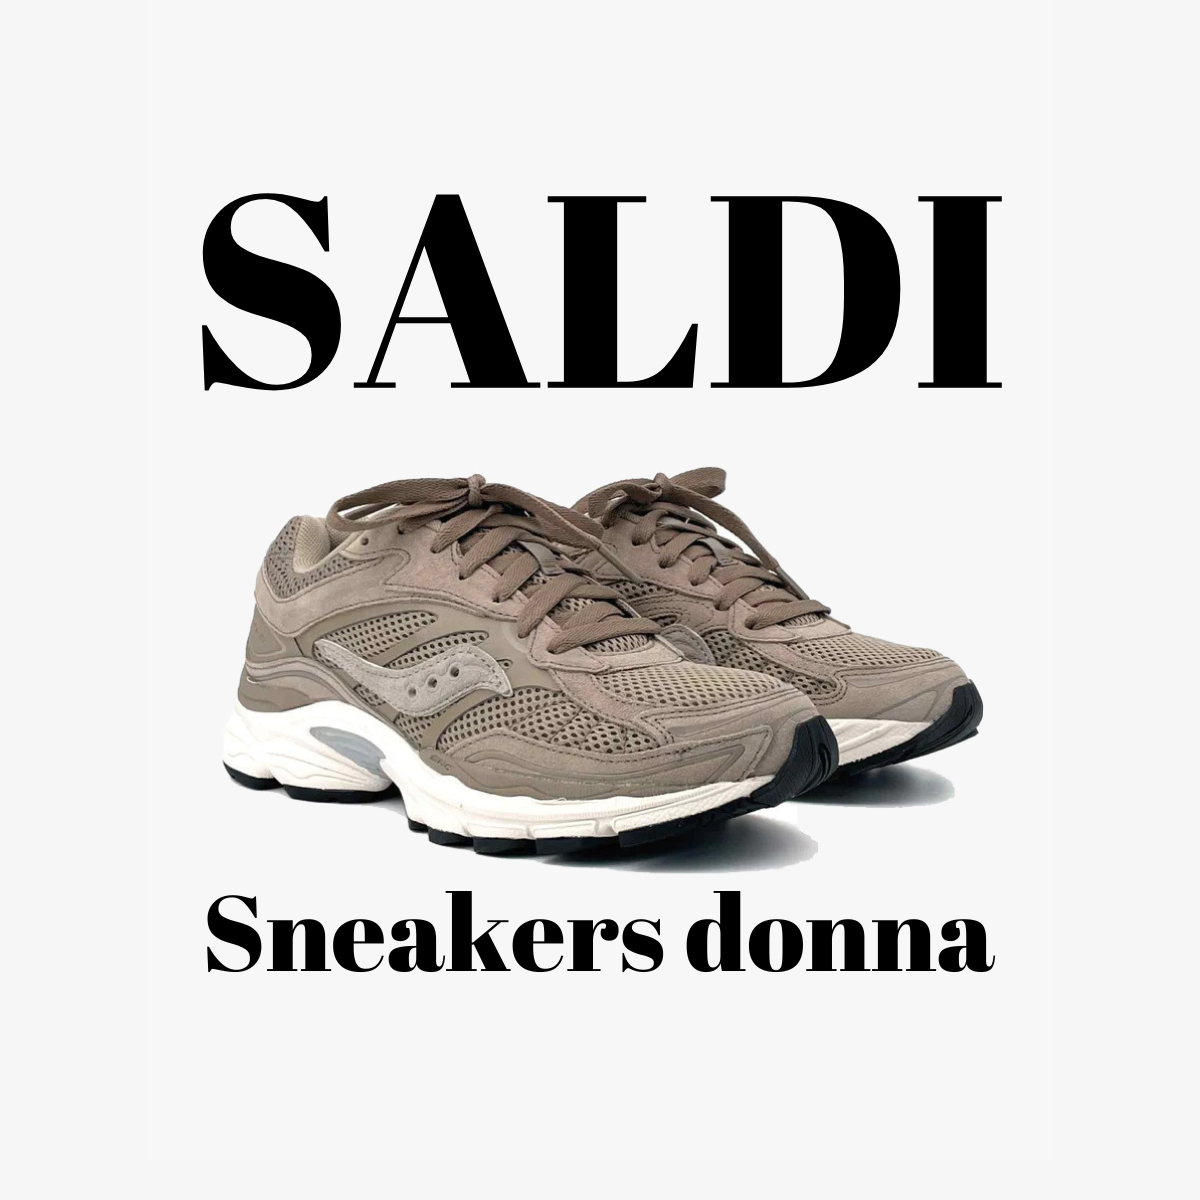 Saldi sneakers donna